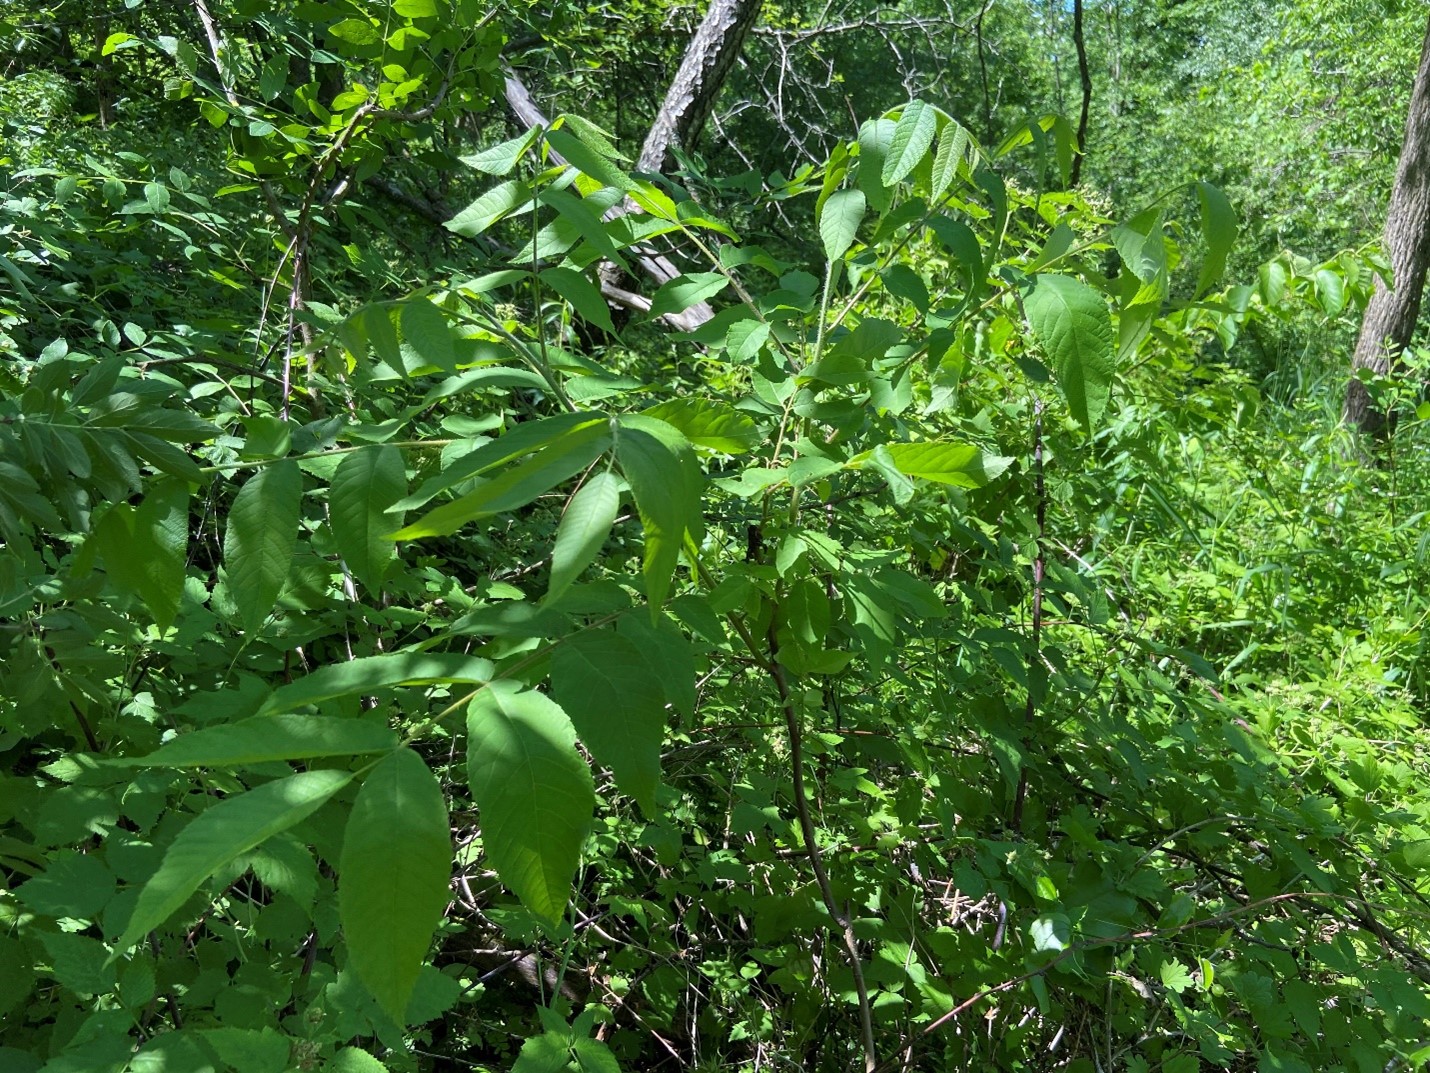 A stem of black walnut regeneration among heavy competition, summer 2020